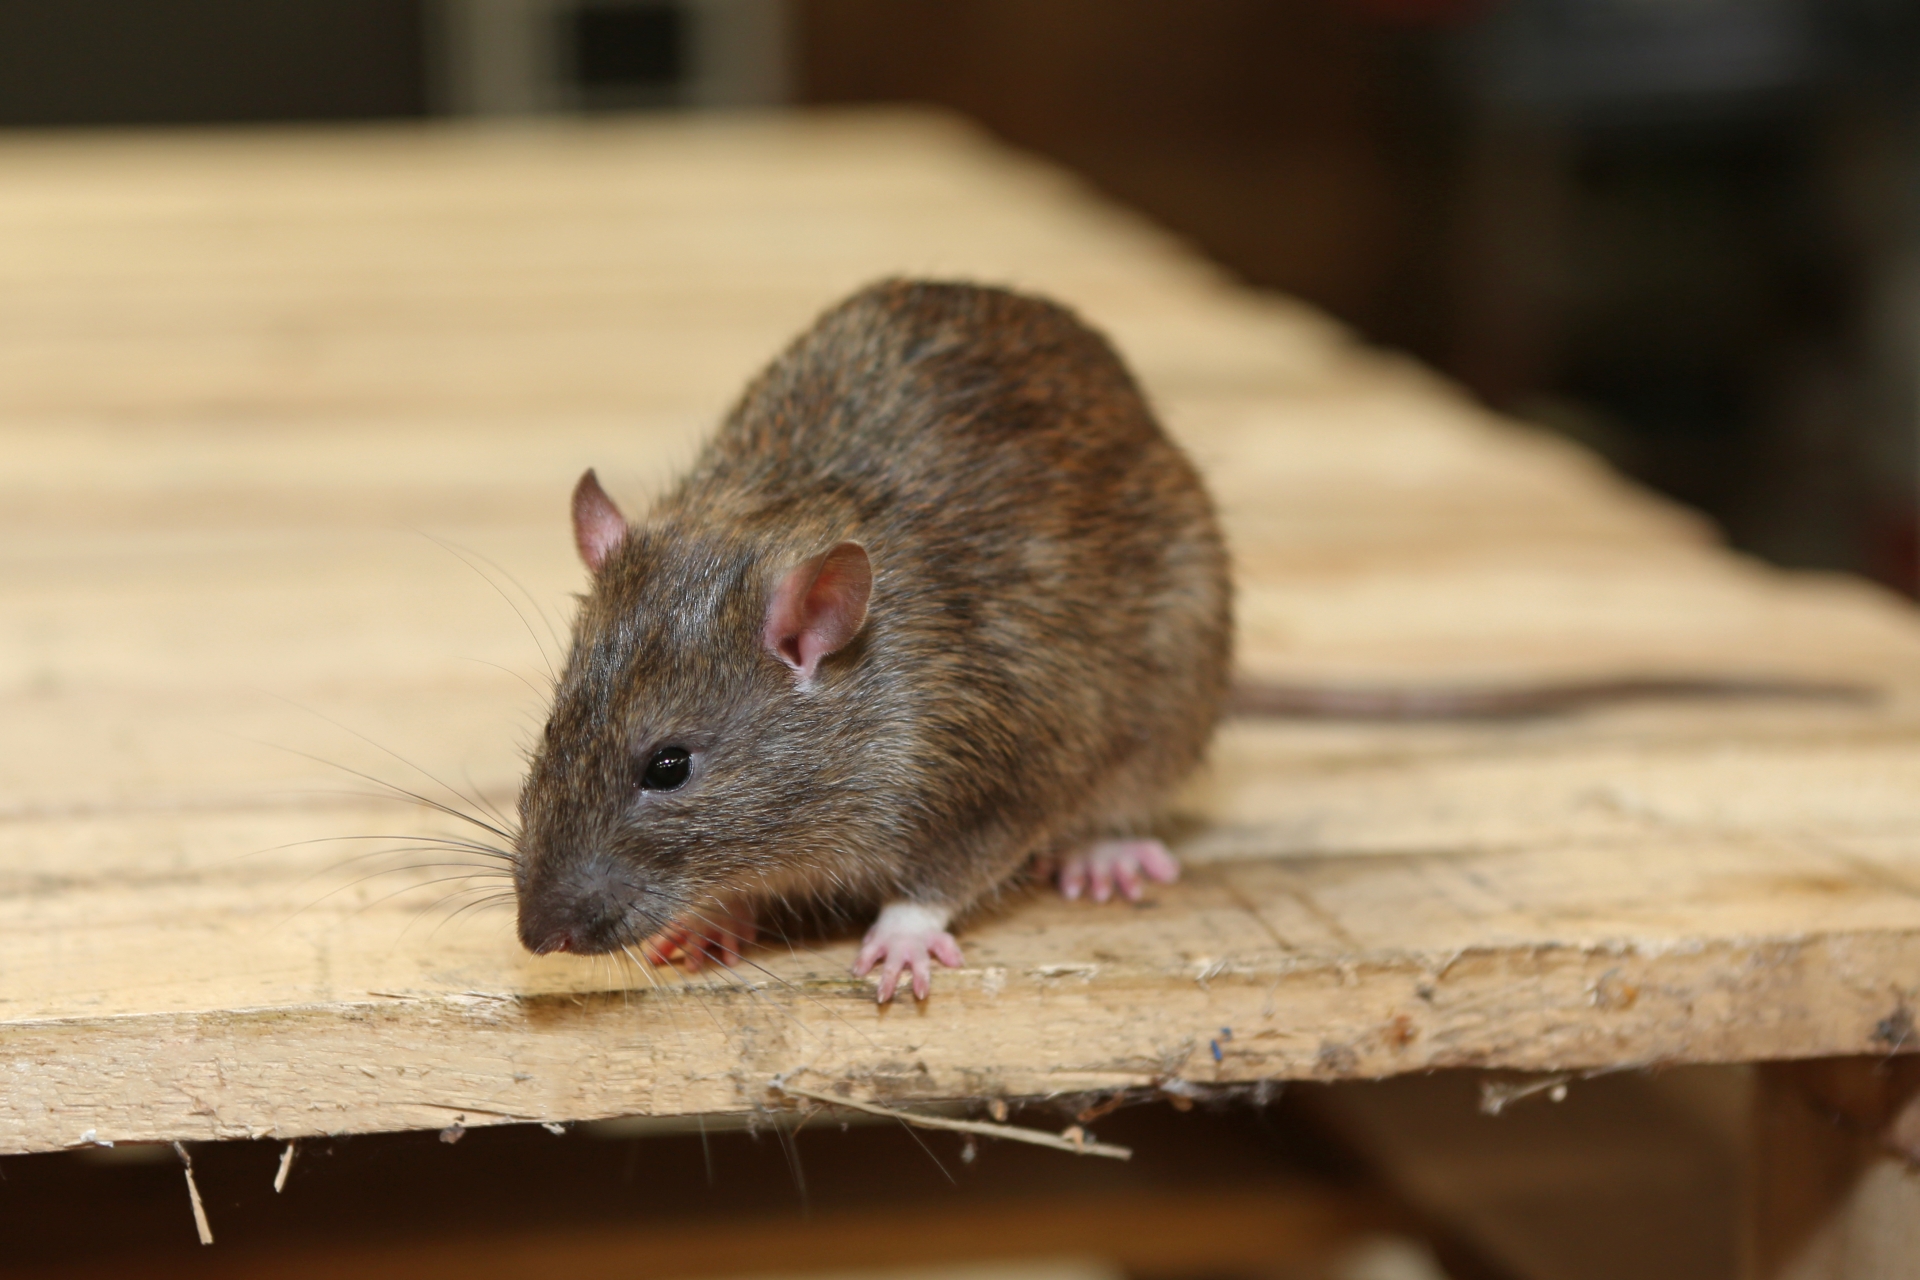 Rat extermination, Pest Control in Wembley Park, HA9. Call Now 020 8166 9746